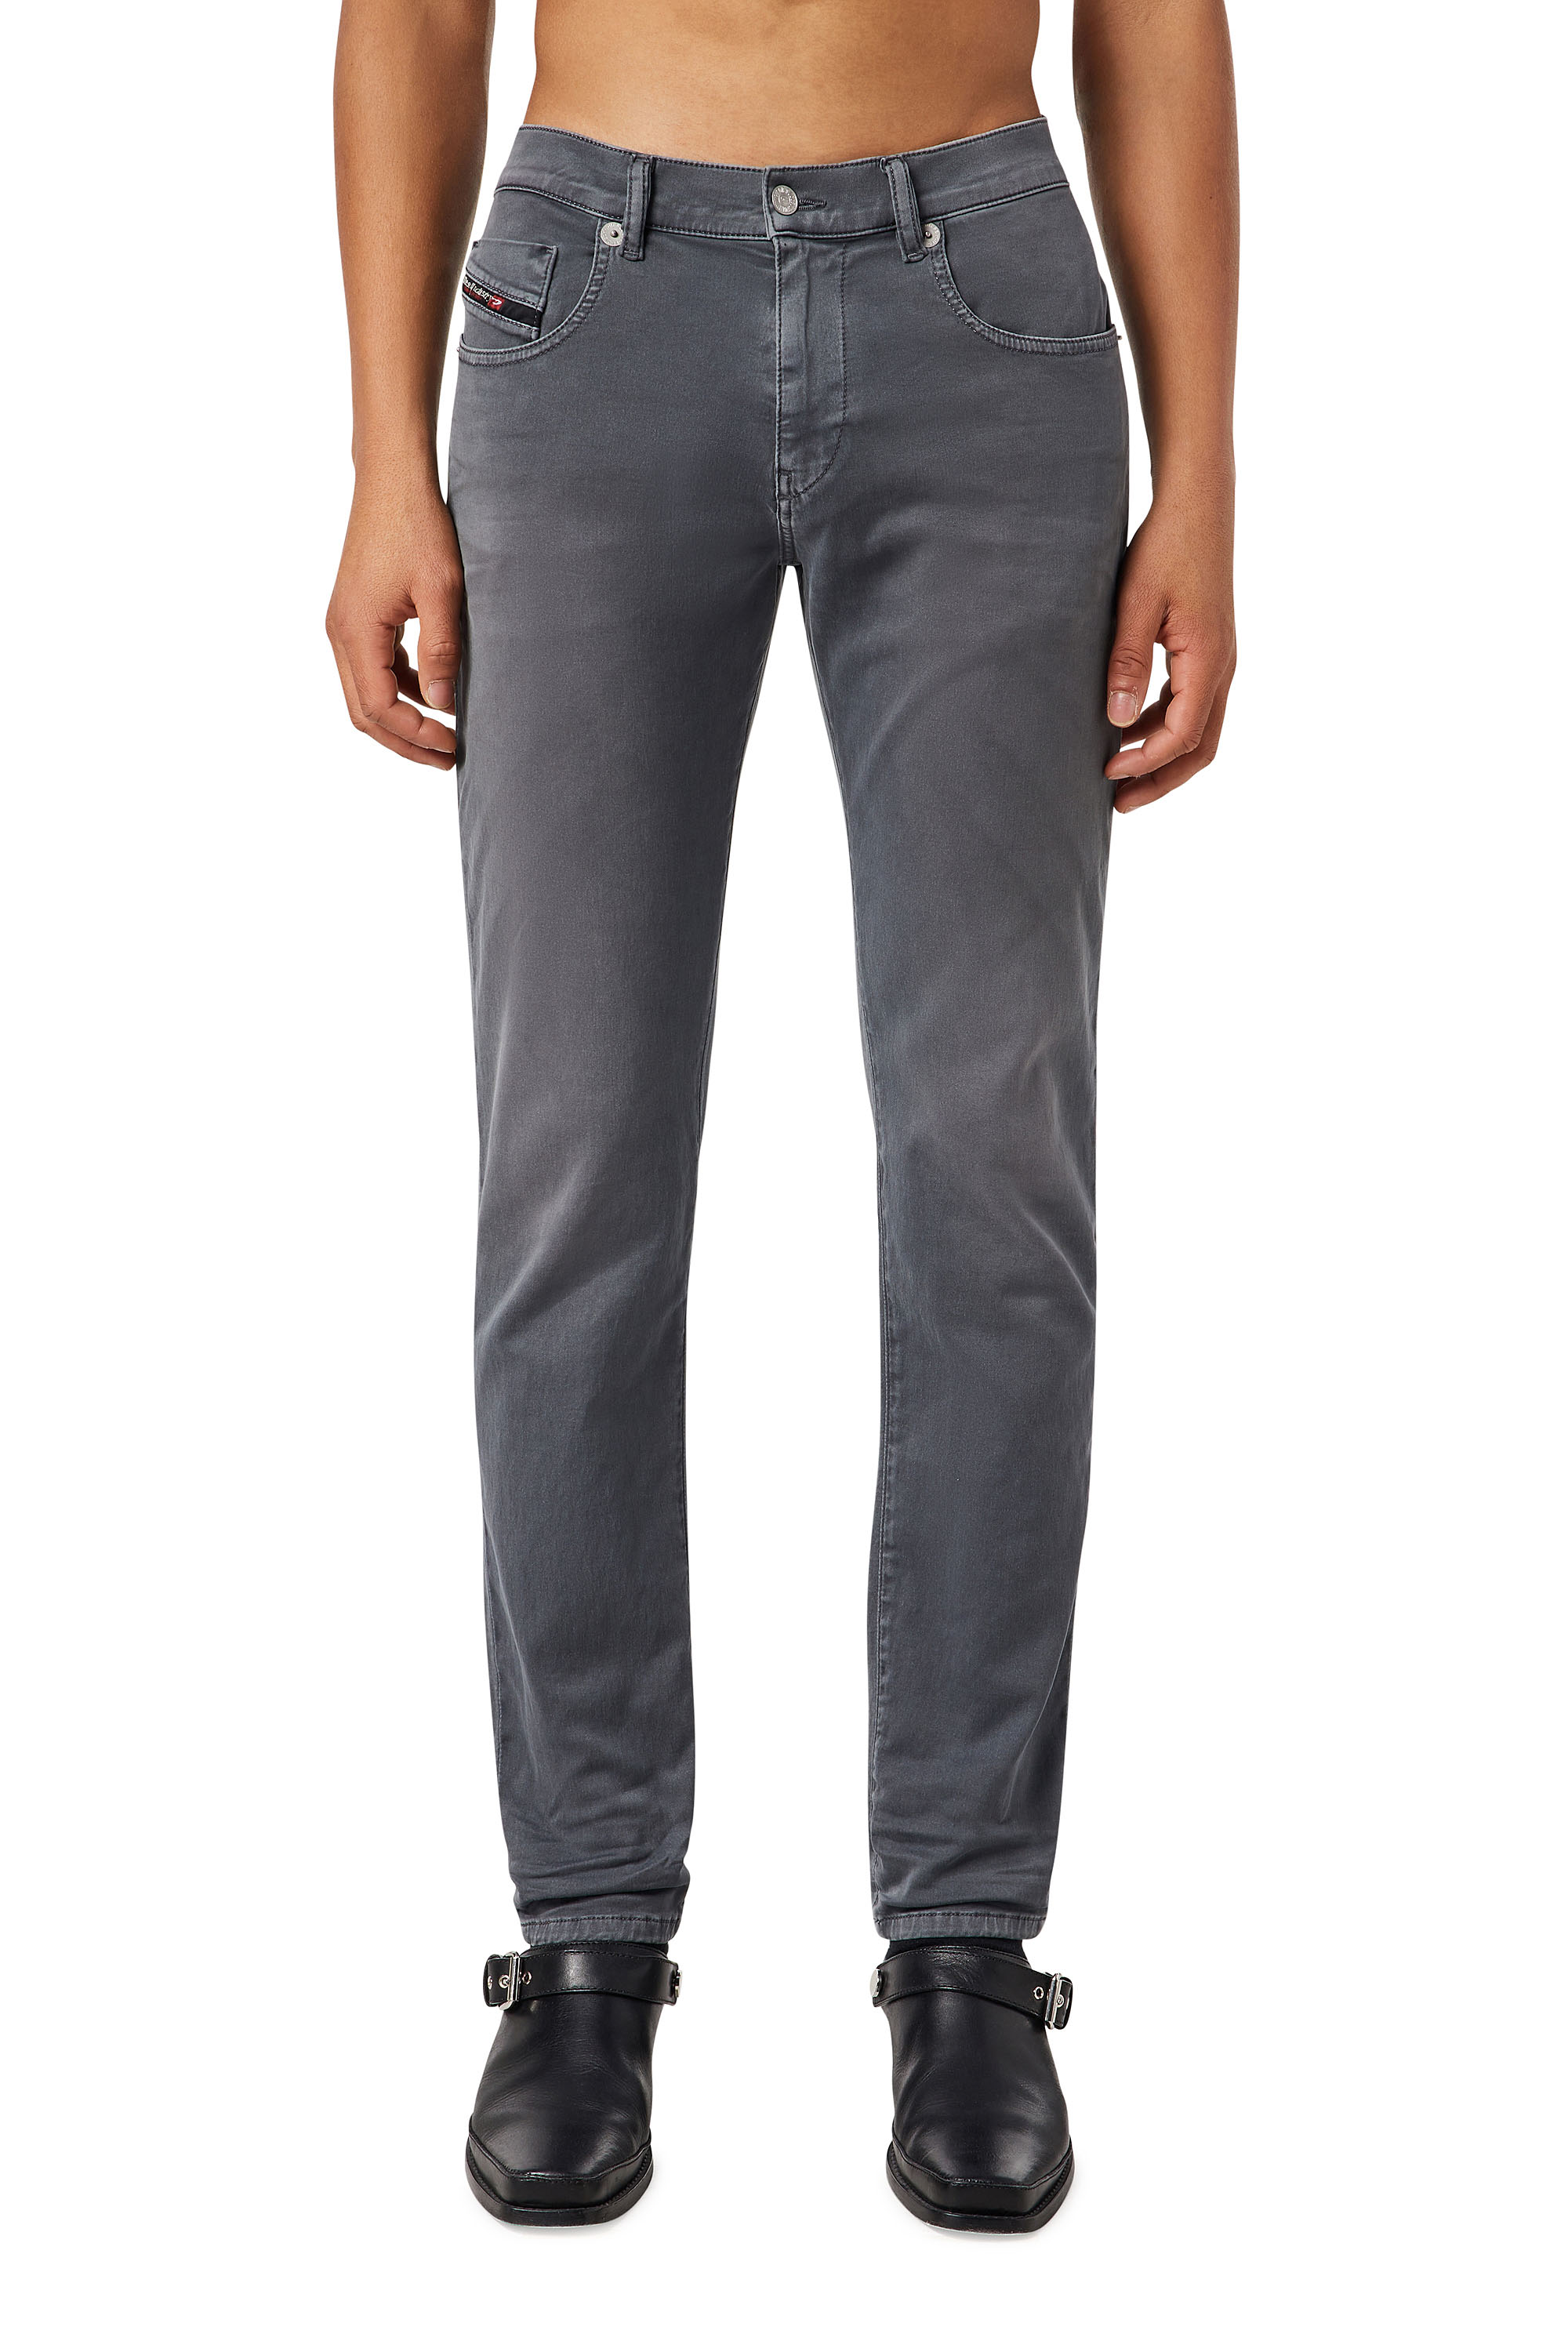 Diesel Slim D-strukt Jogg Jeans In Grey